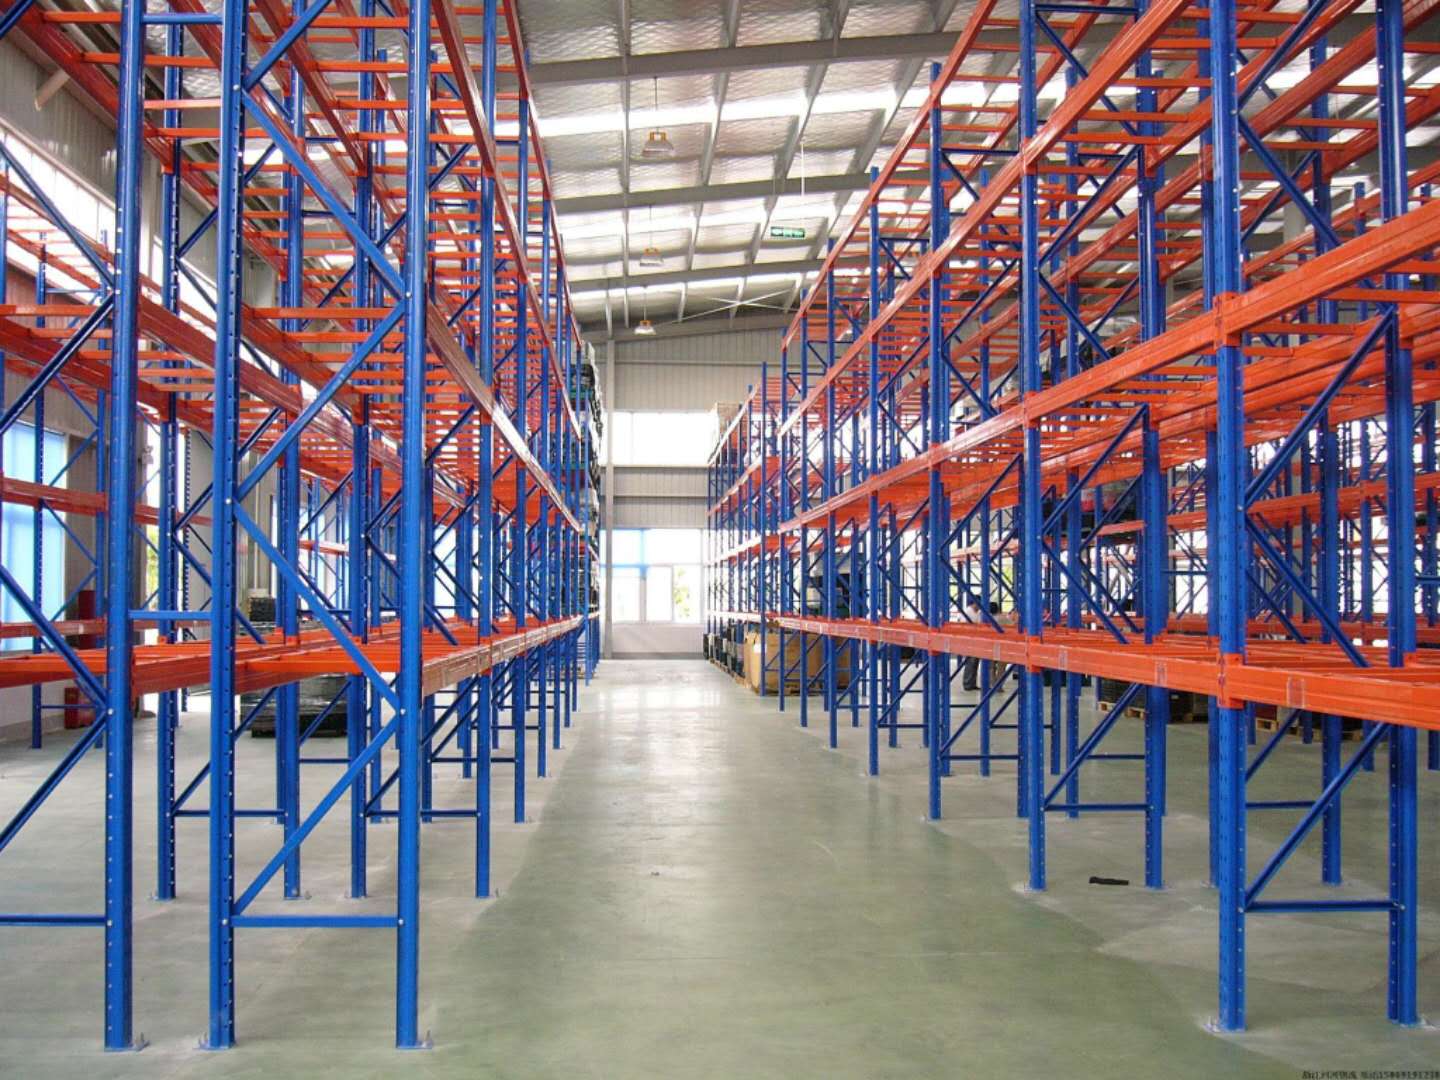 High shelf warehouse storage rack, layer board storage rack, manufacturer's on-site measurement